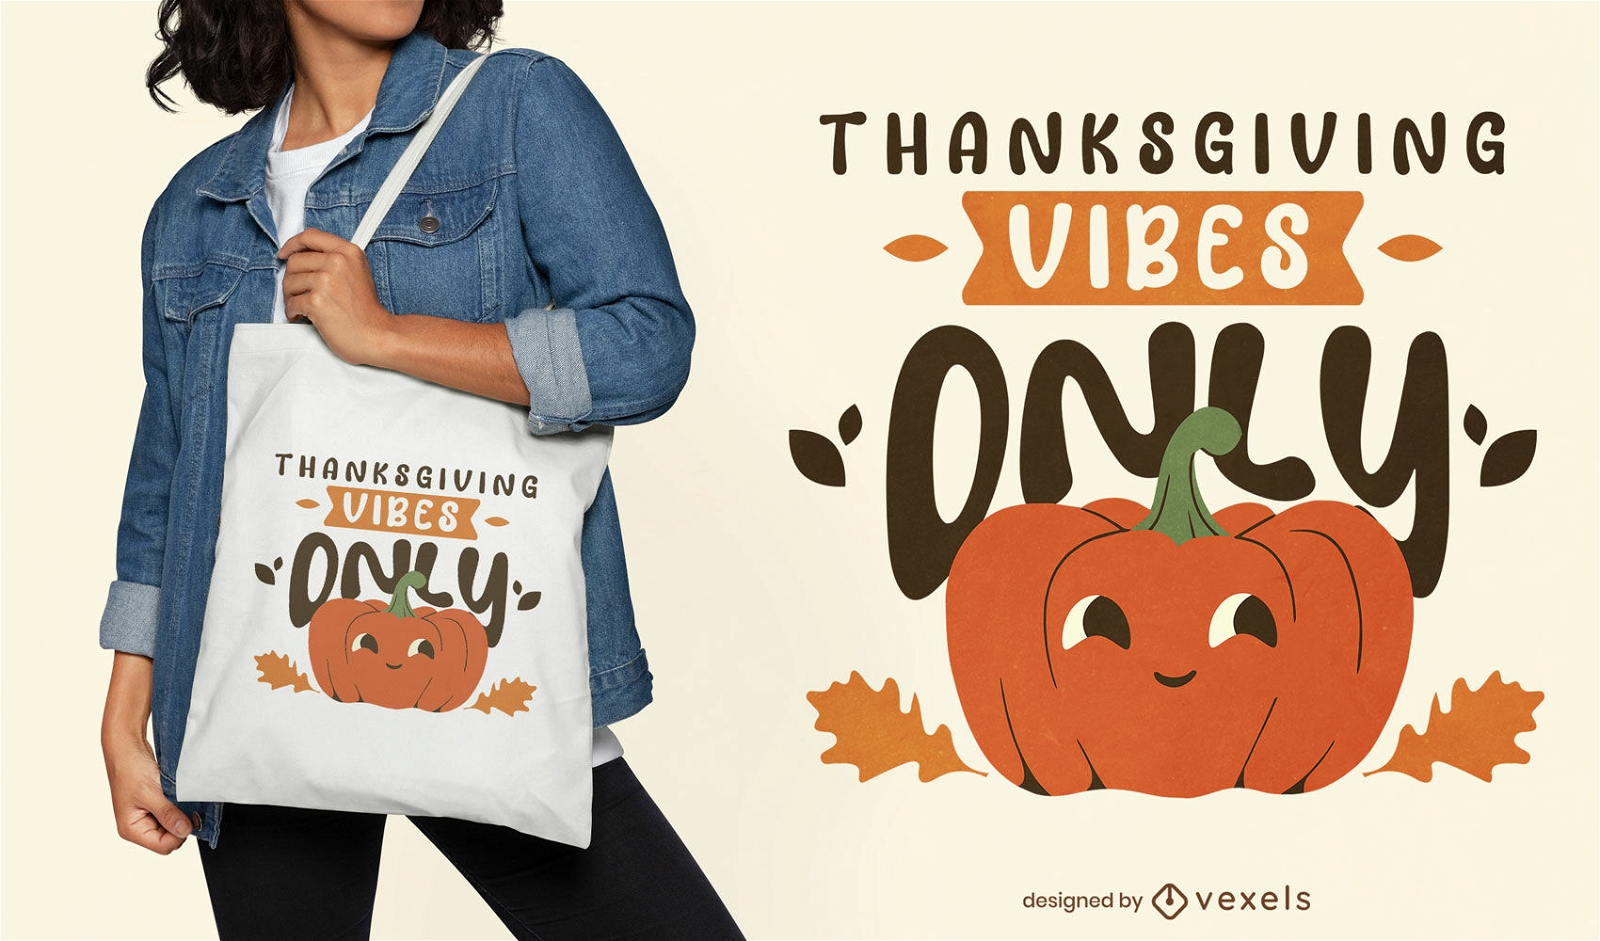 Thanksgiving vibes tote bag design